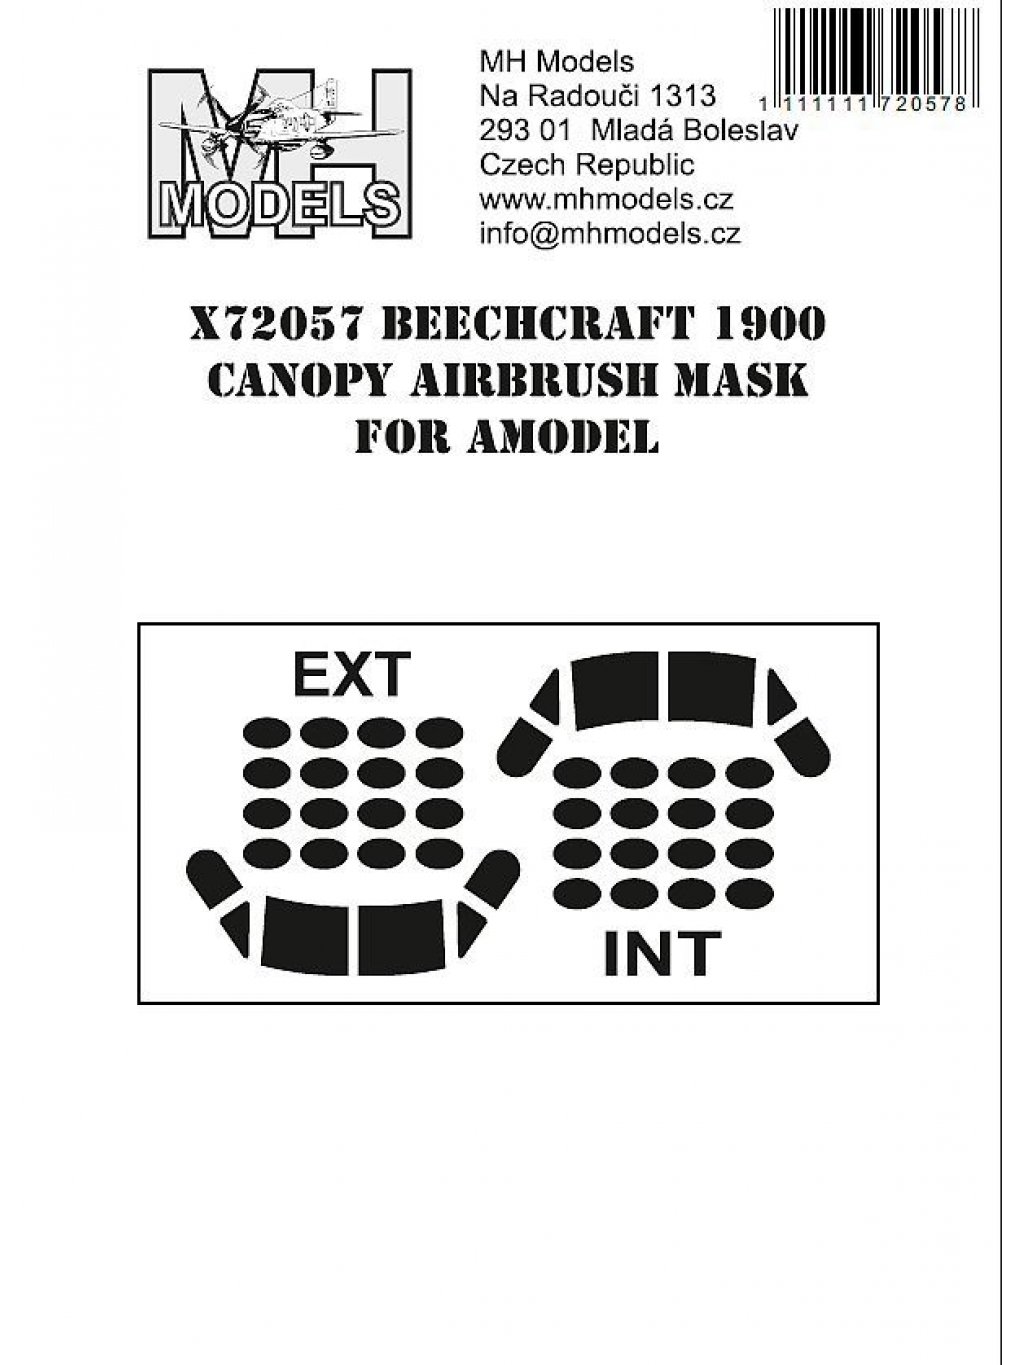 Beechcraft 1900 canopy airbrush mask for Amodel